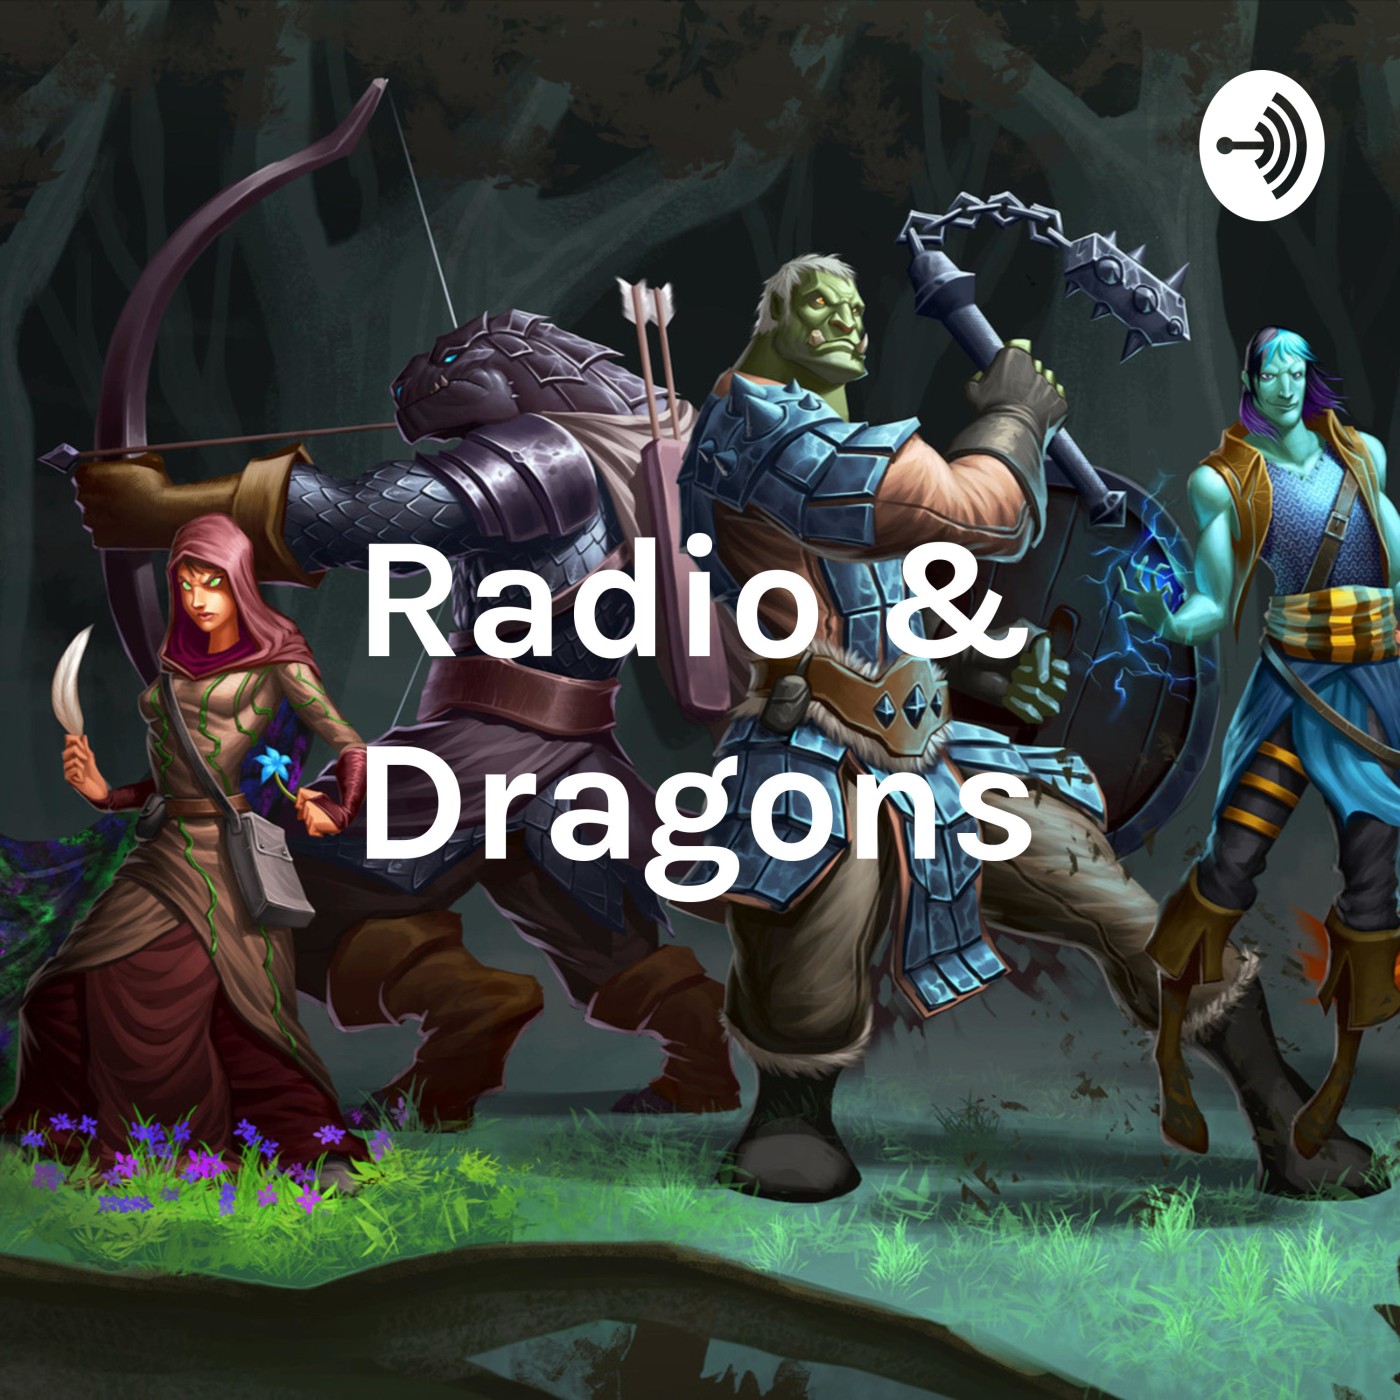 Radio&Dragons: la caverne des disparitions, épisode 2